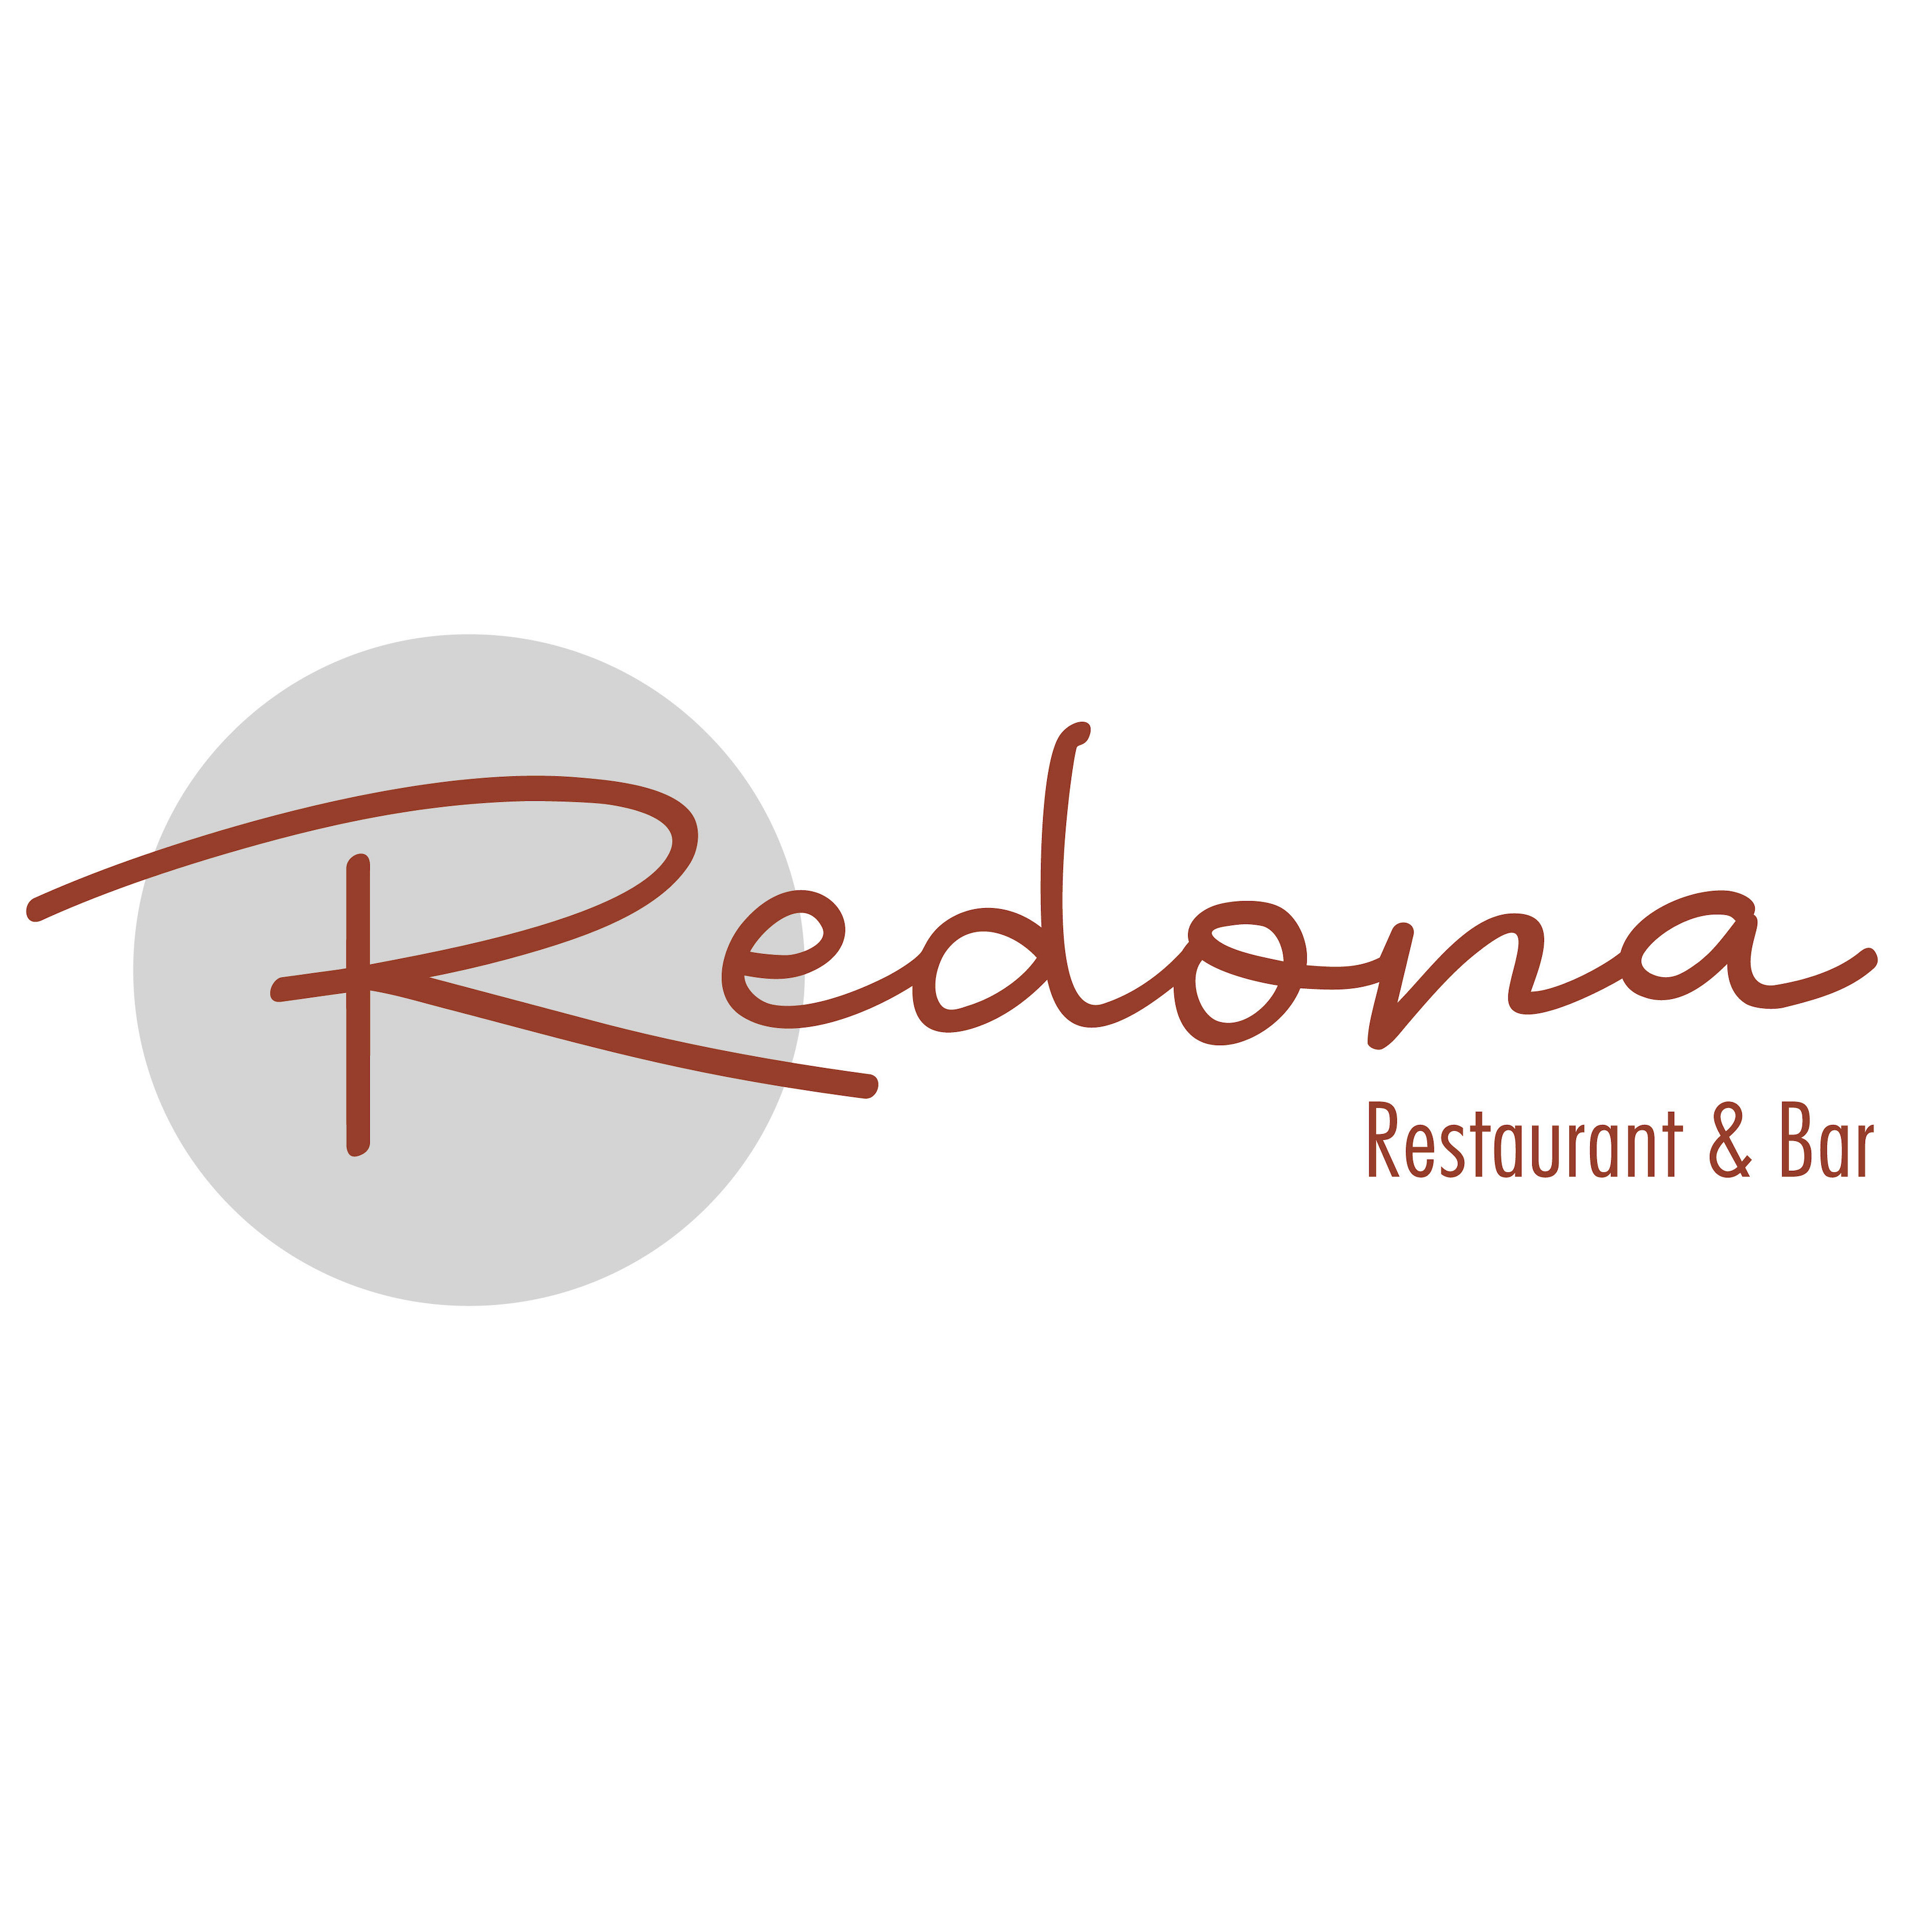 Redona - Restaurant & Bar in Hage in Ostfriesland - Logo